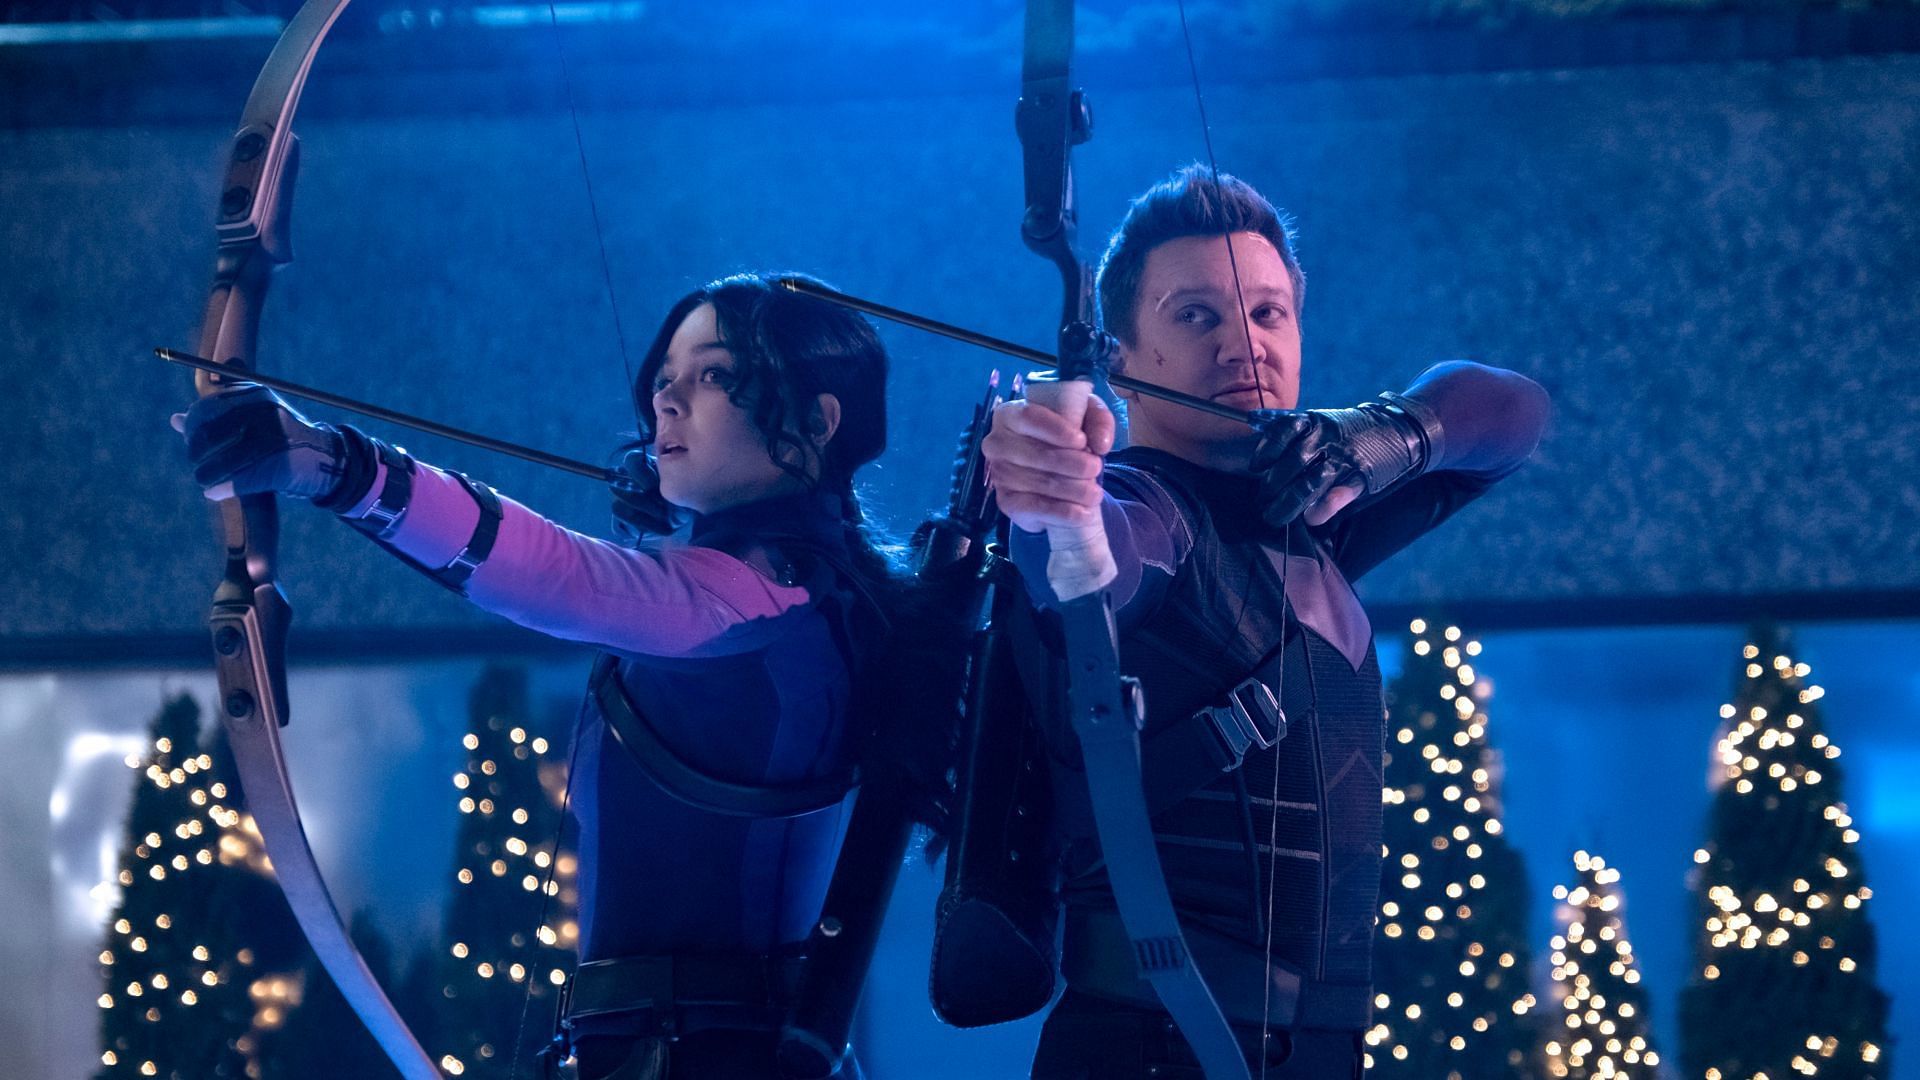 Kate Bishop/Hawkeye and Clint Barton/Hawkeye in Hawkeye (image via Marvel Studios)